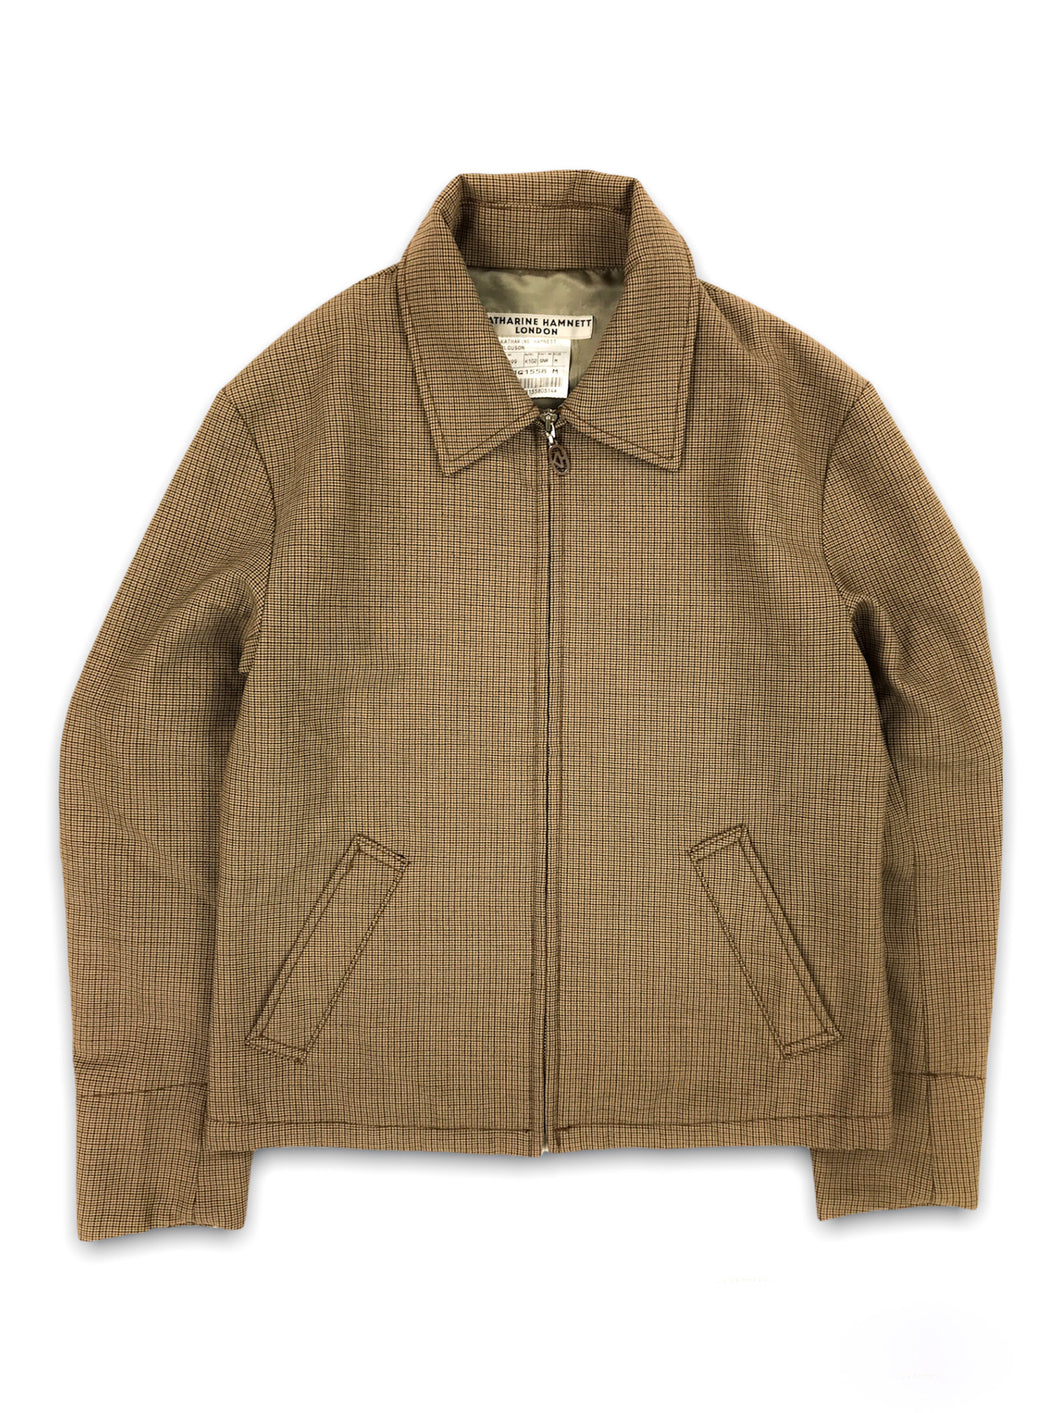 KATHERINE HAMNETT Wool Blend Harrington Jacket (Late 90’s-Early 00’s)(S-M)